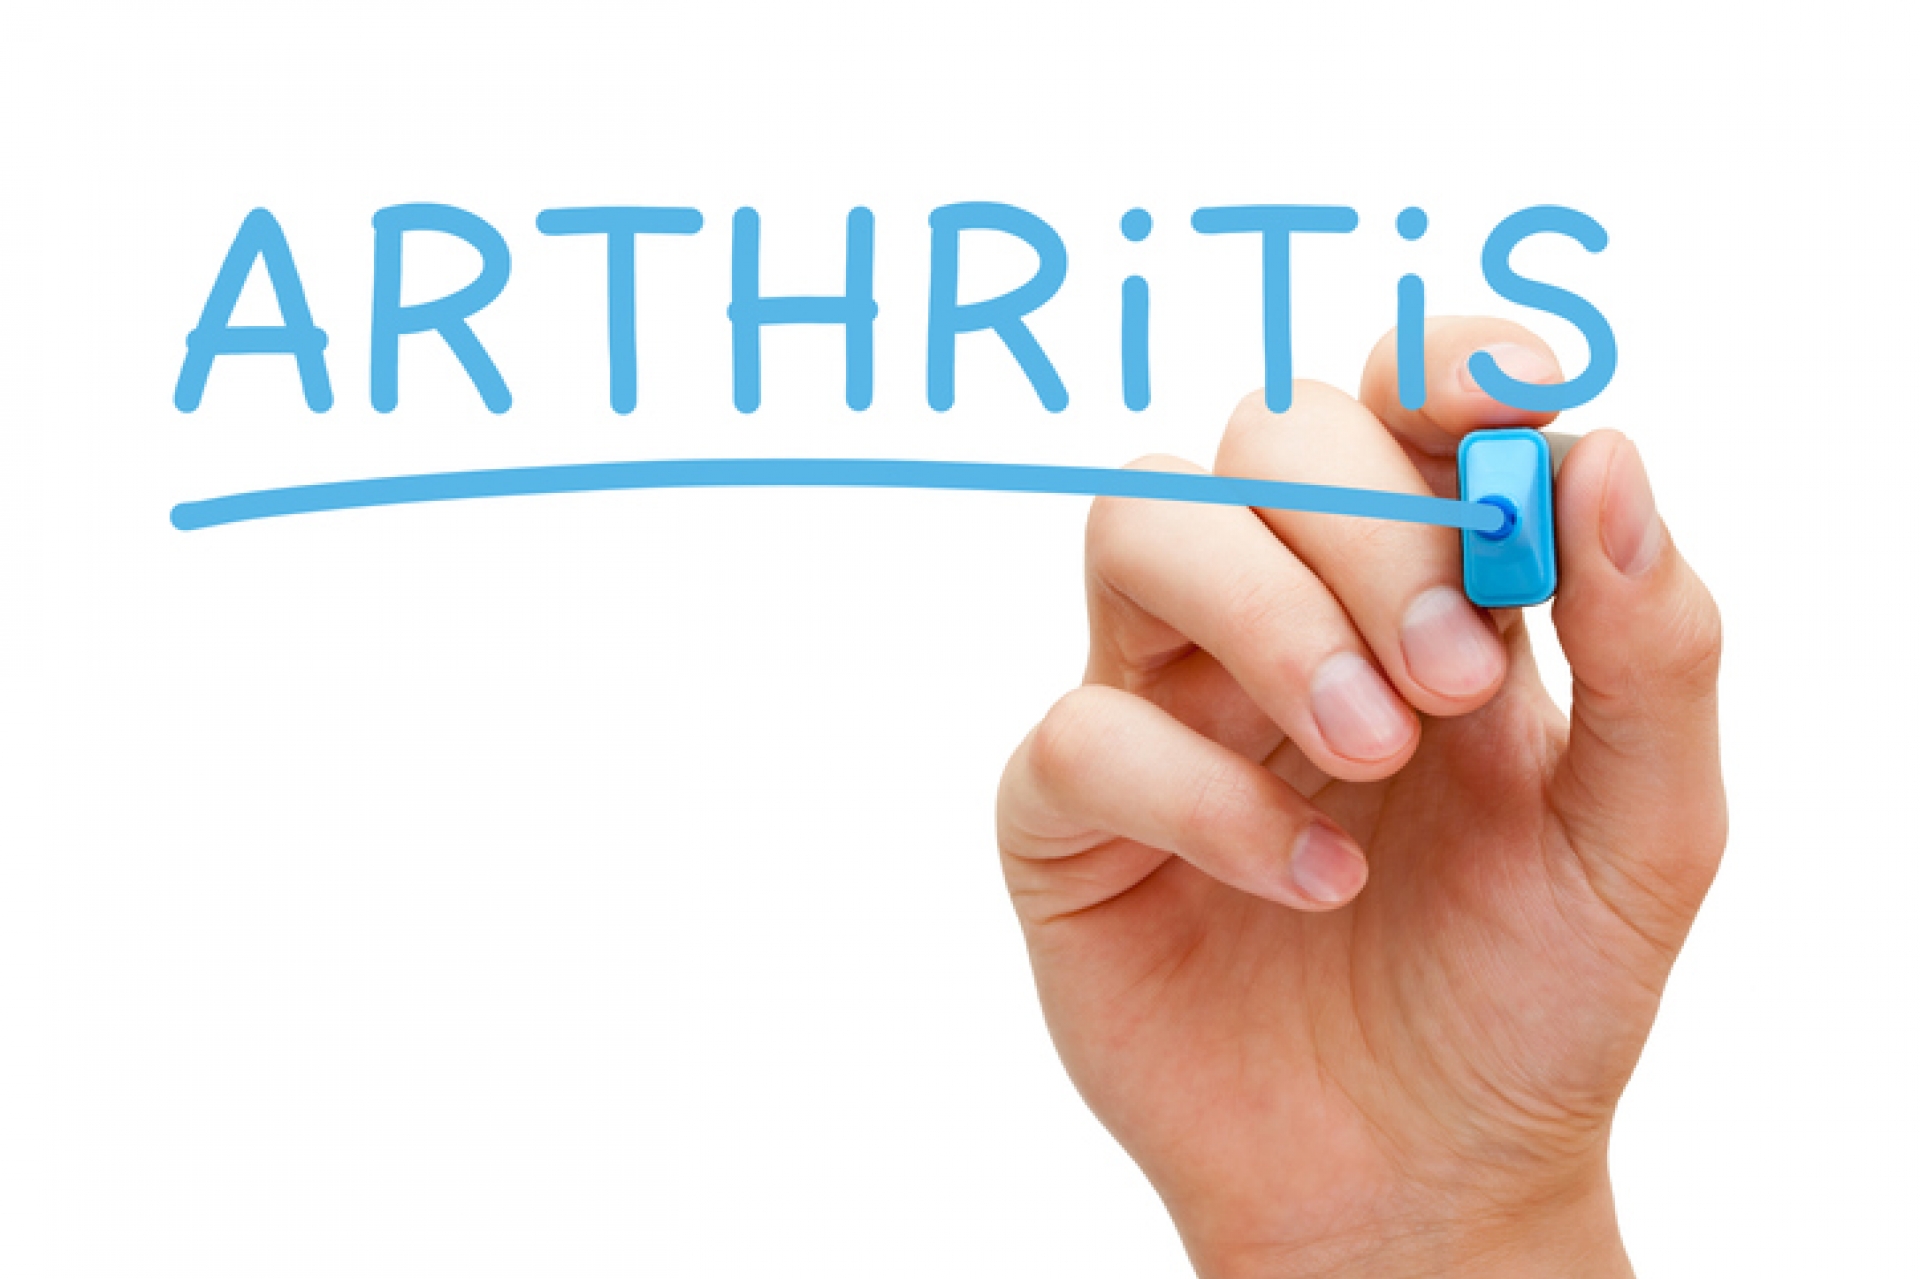  Arthritis treatment image